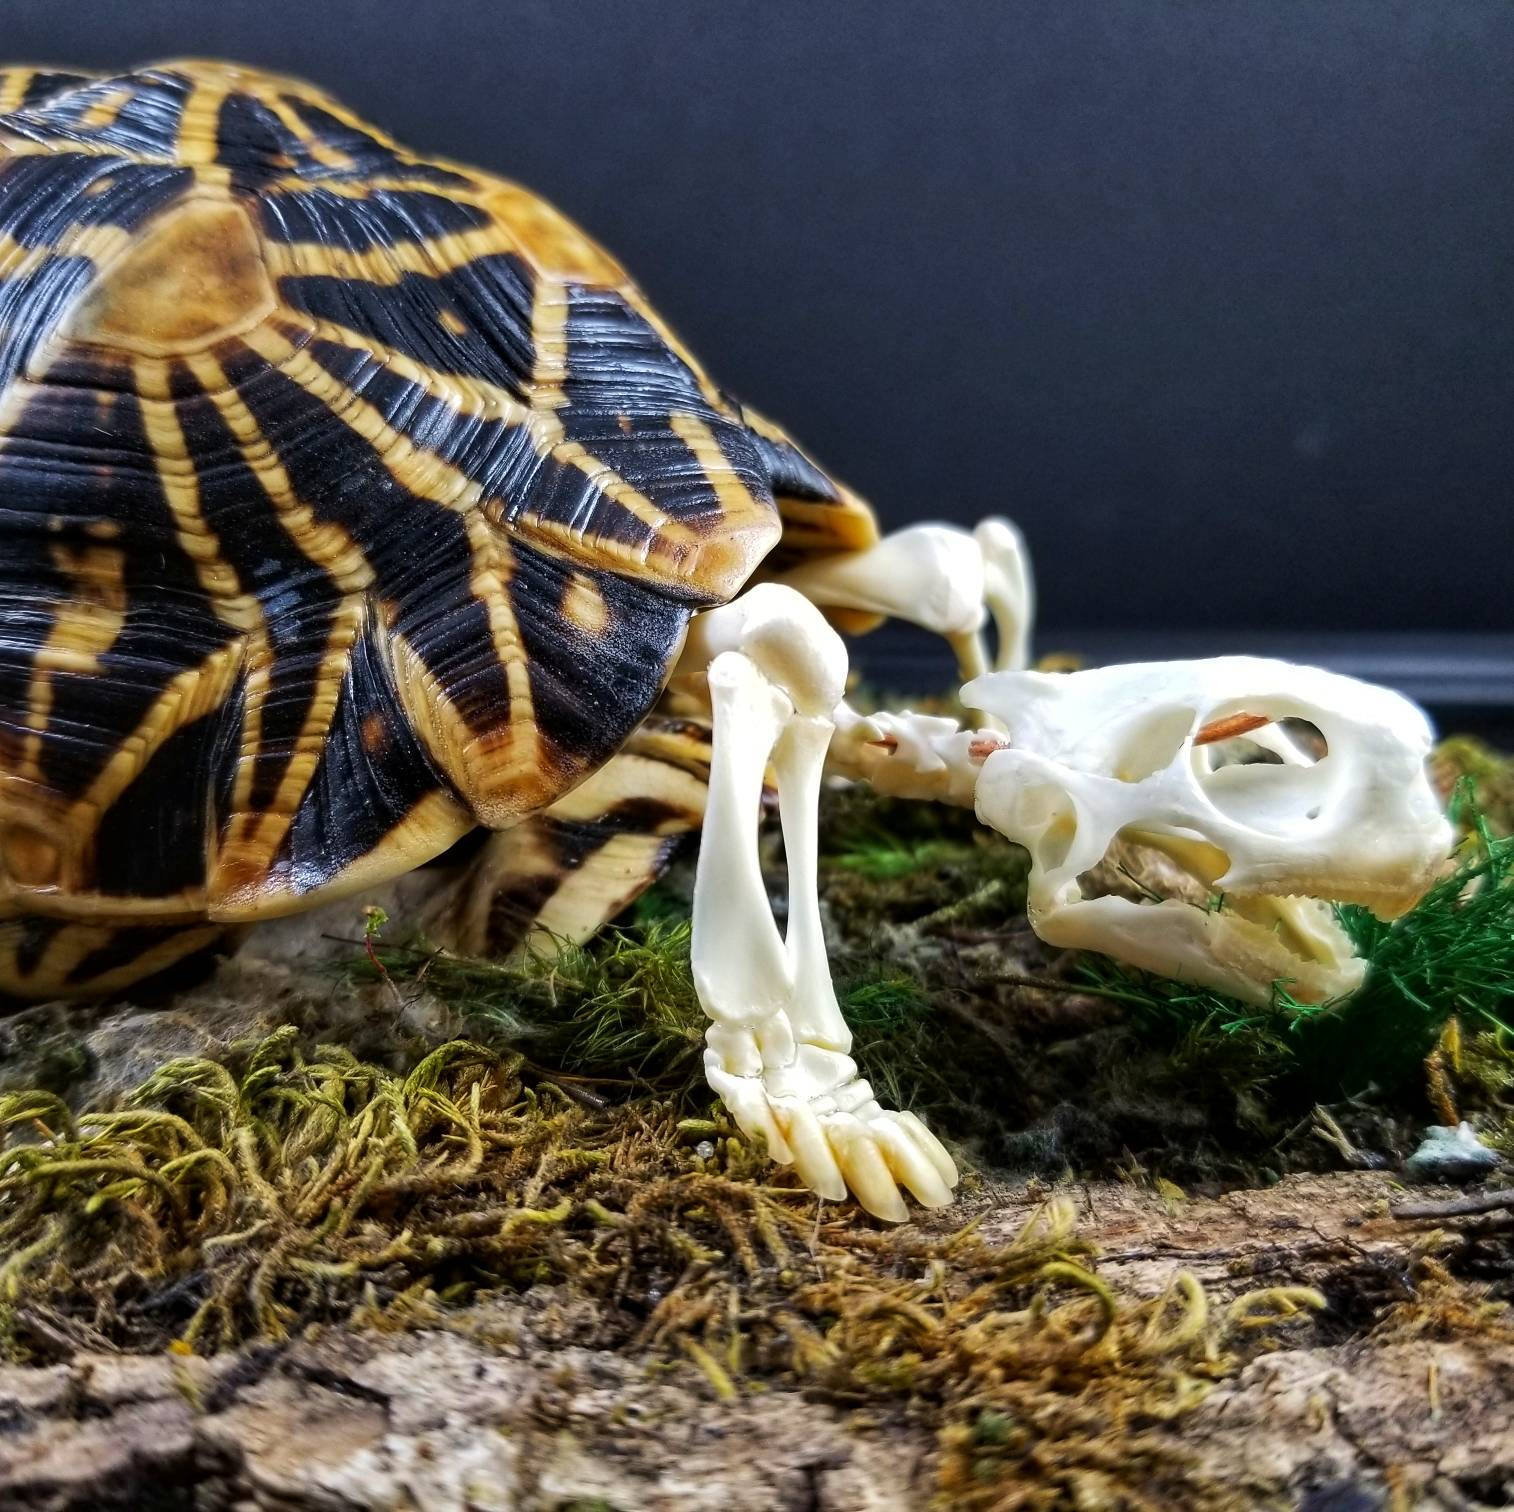 Indian Star Tortoise Skeleton in Glass Display Diorama | Modified ...